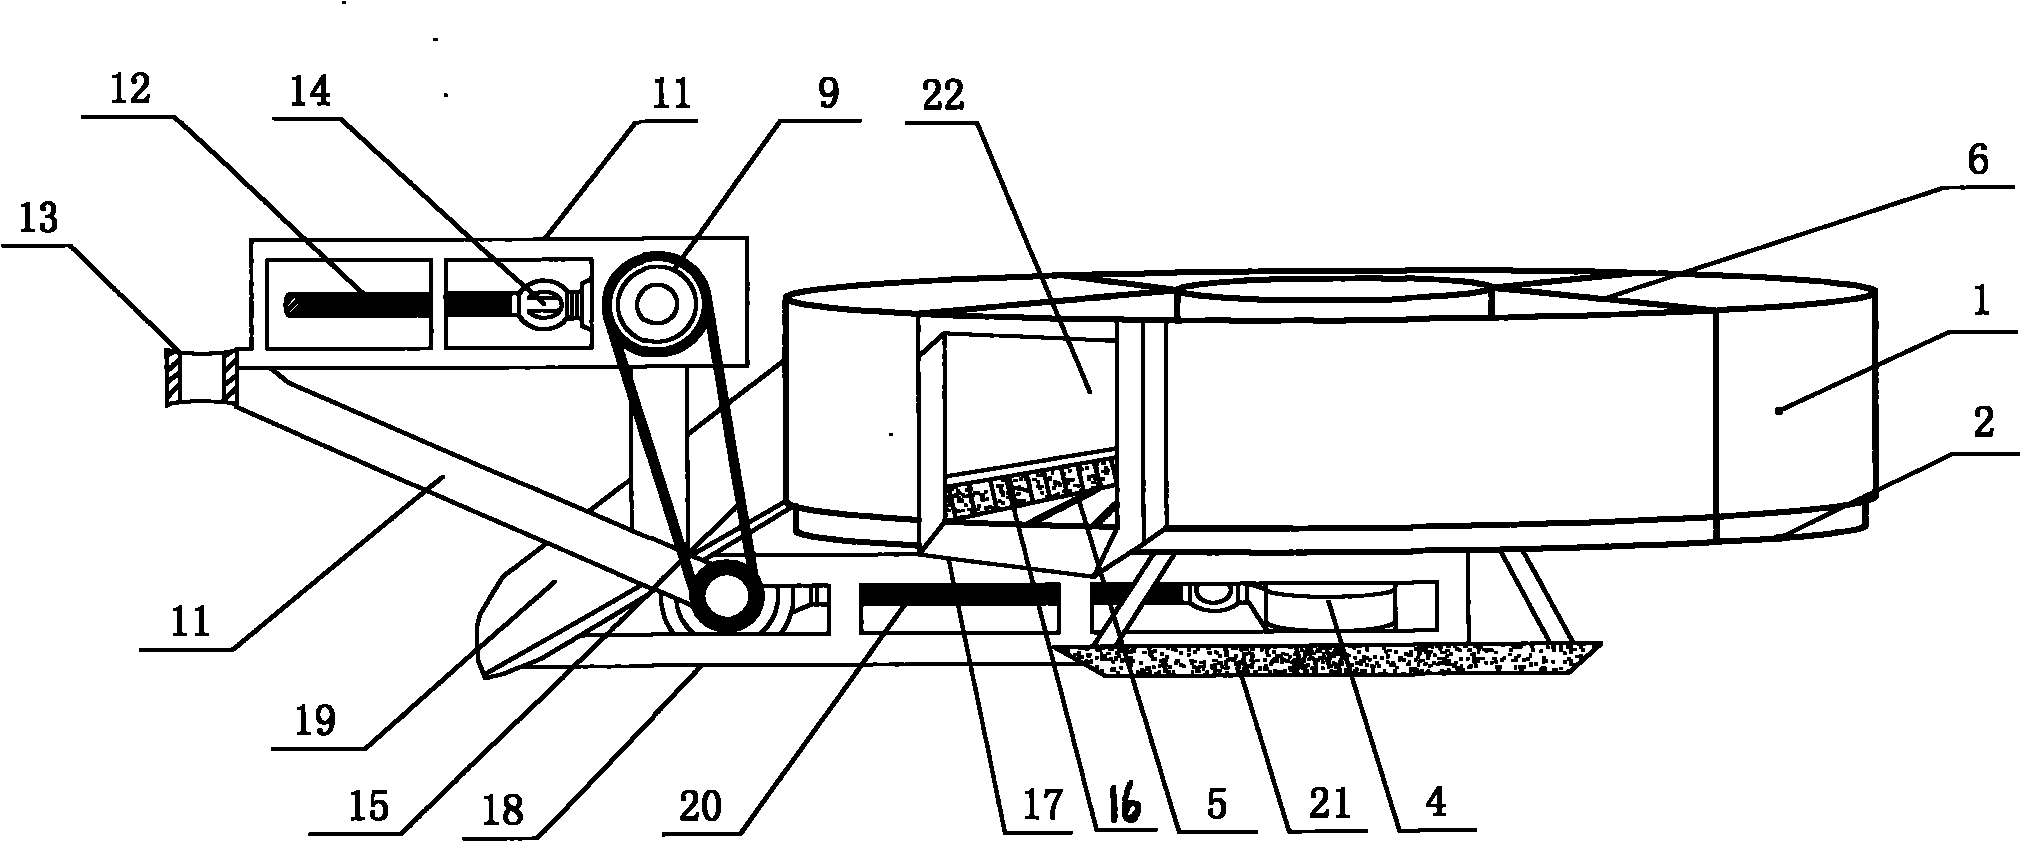 Turntable type potato harvesting machine